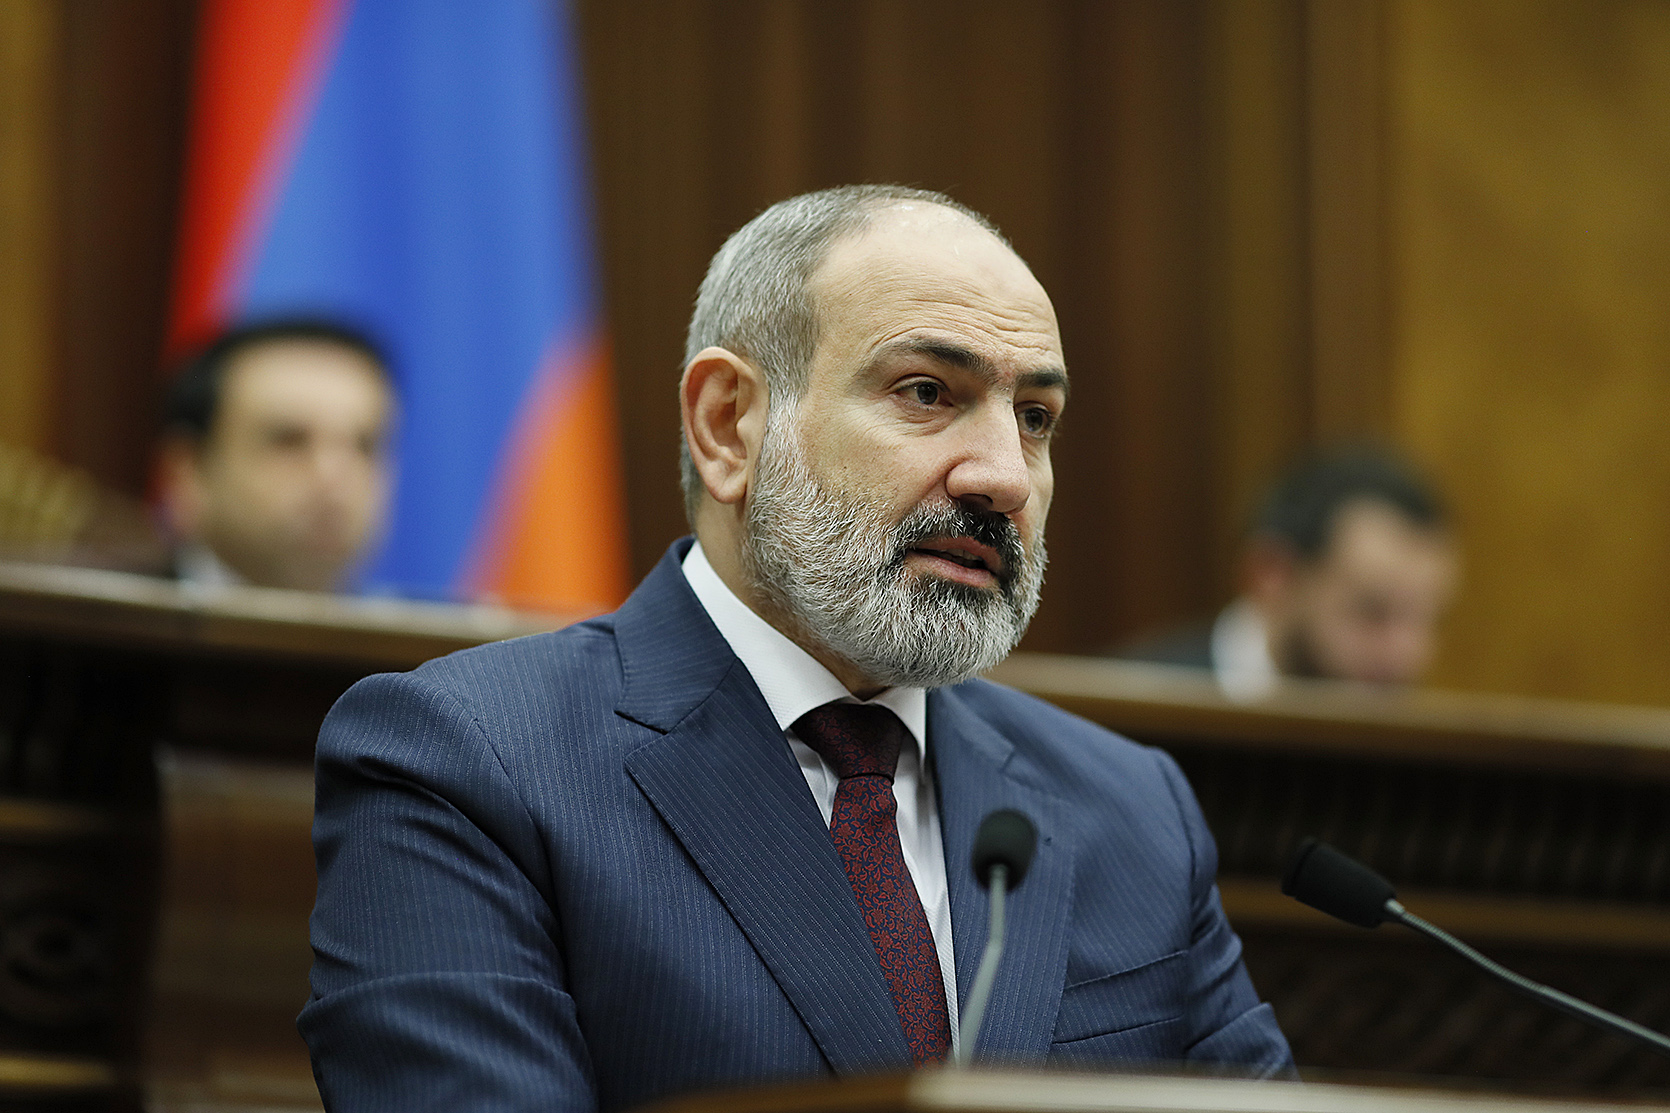 Pashinyan's speech in parliament